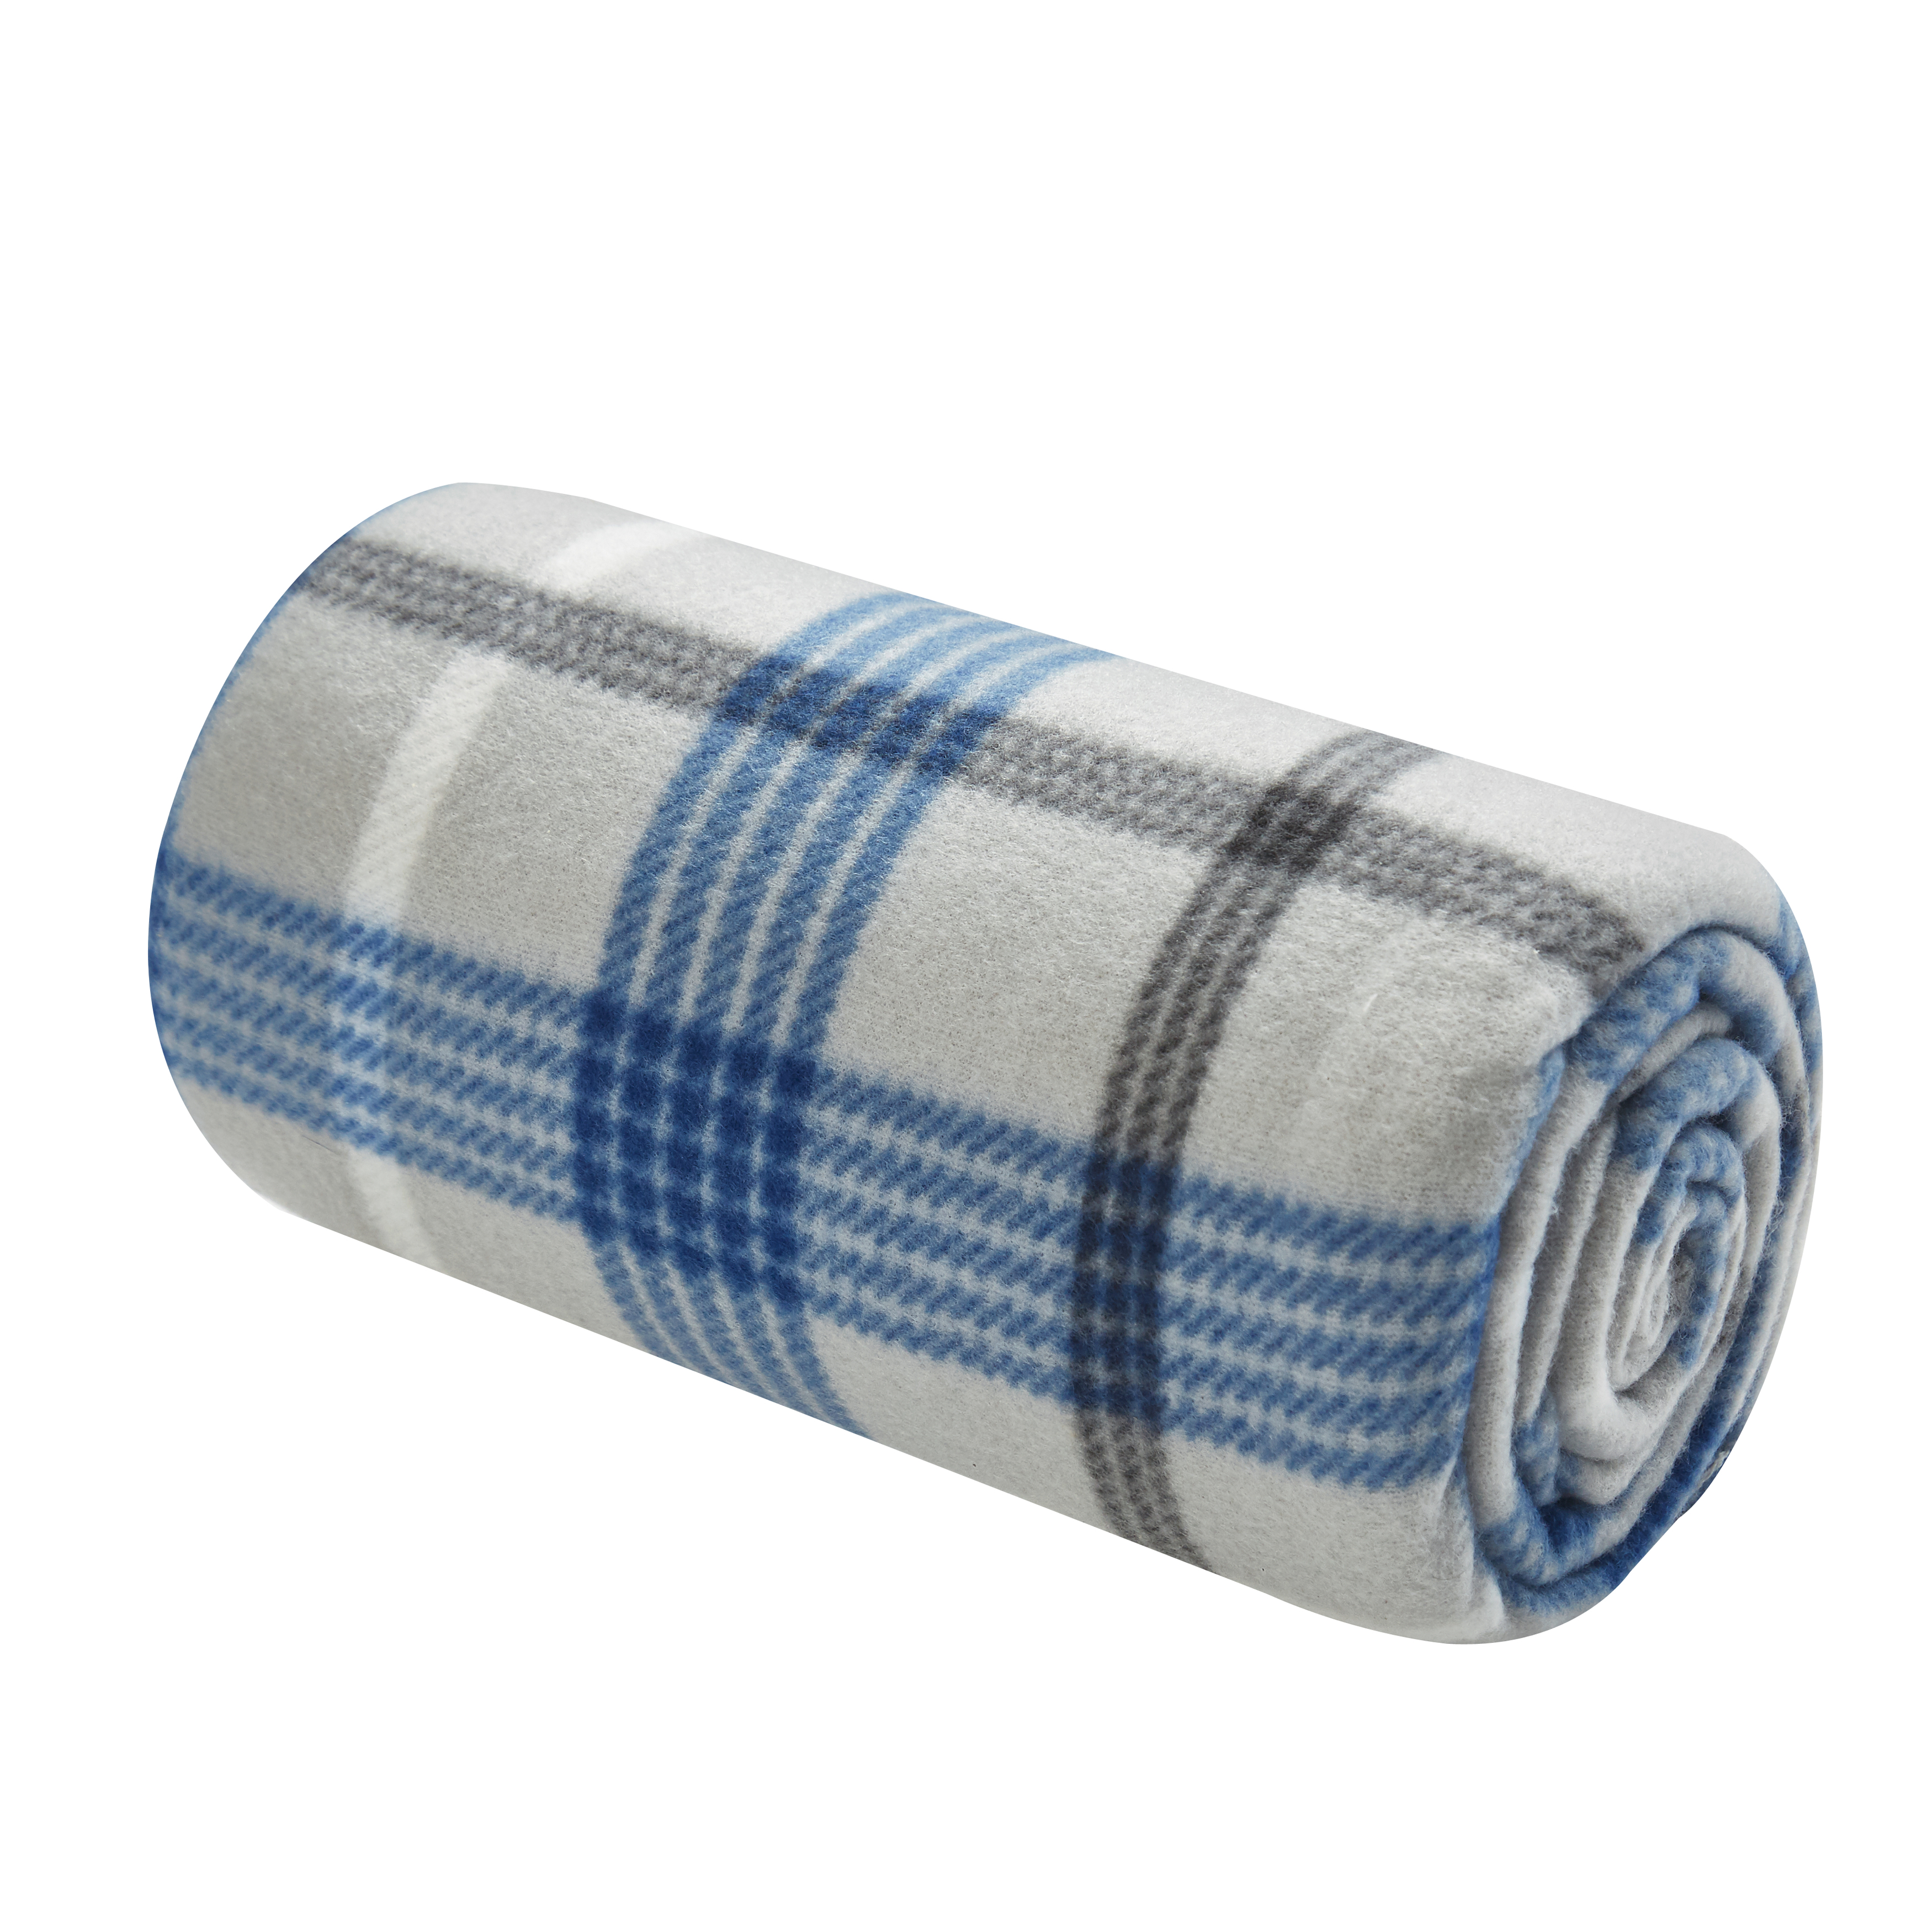 Mainstays Fleece Gray & Blue Plaid Throw Blanket, 50" x 60" - image 1 of 5